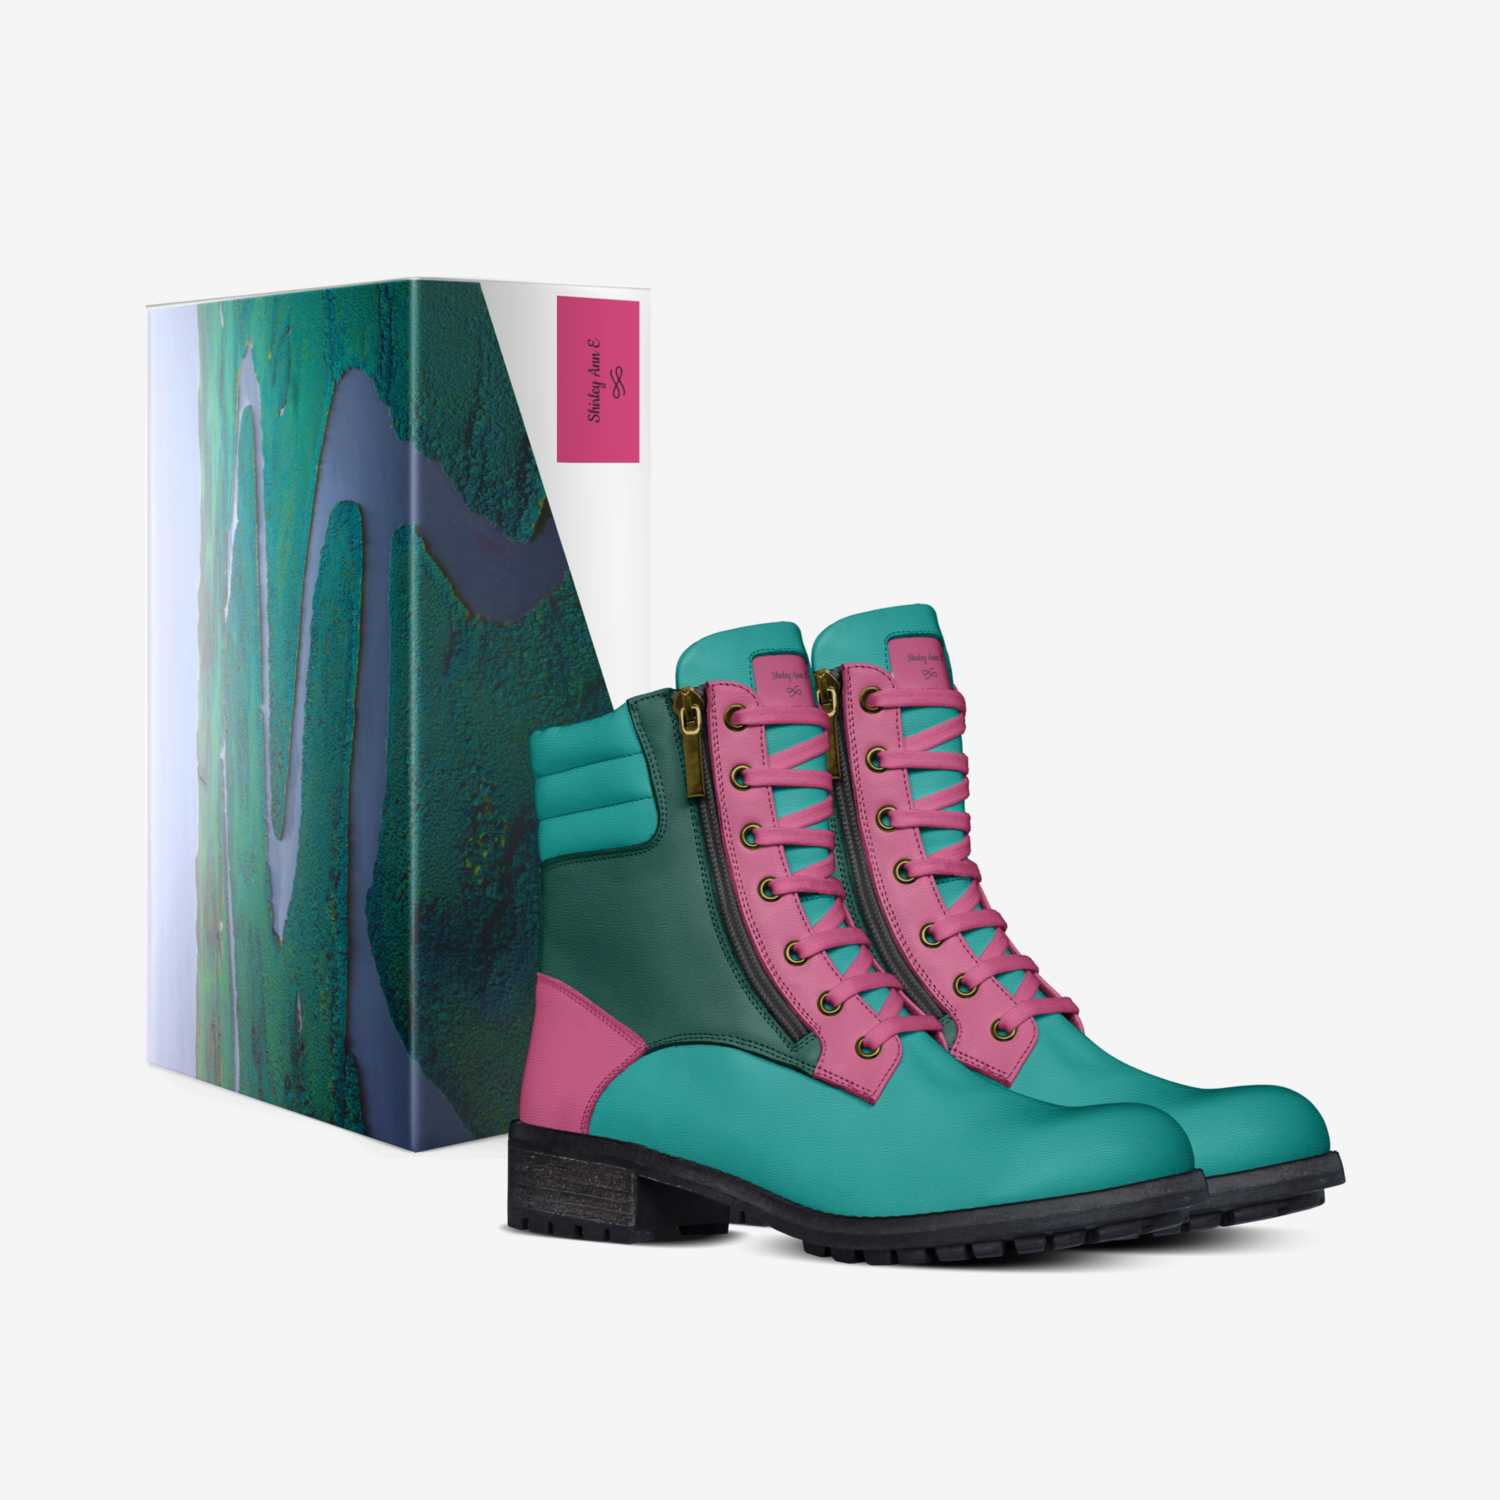 Shirley Ann E custom made in Italy shoes by Derrick Elliott | Box view